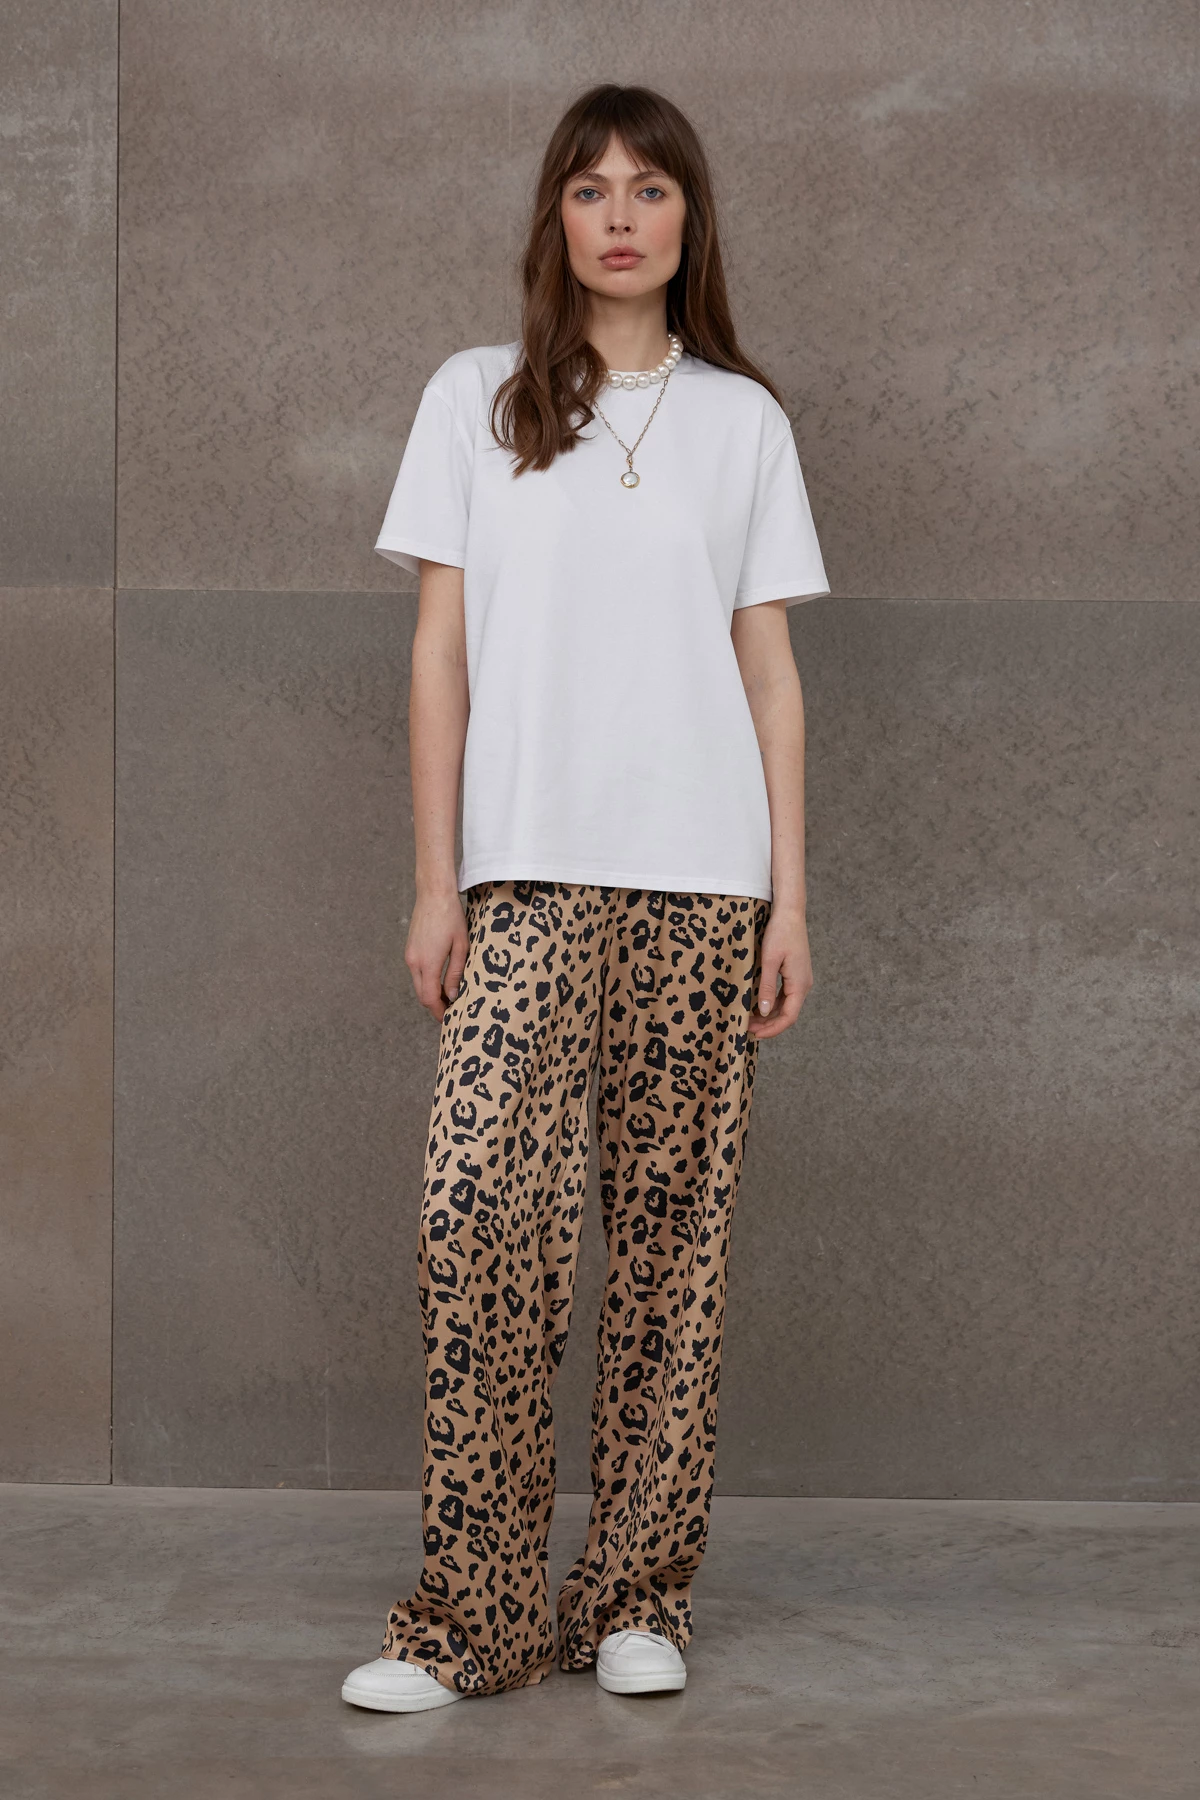 Straight satin pants in leopard print, photo 1